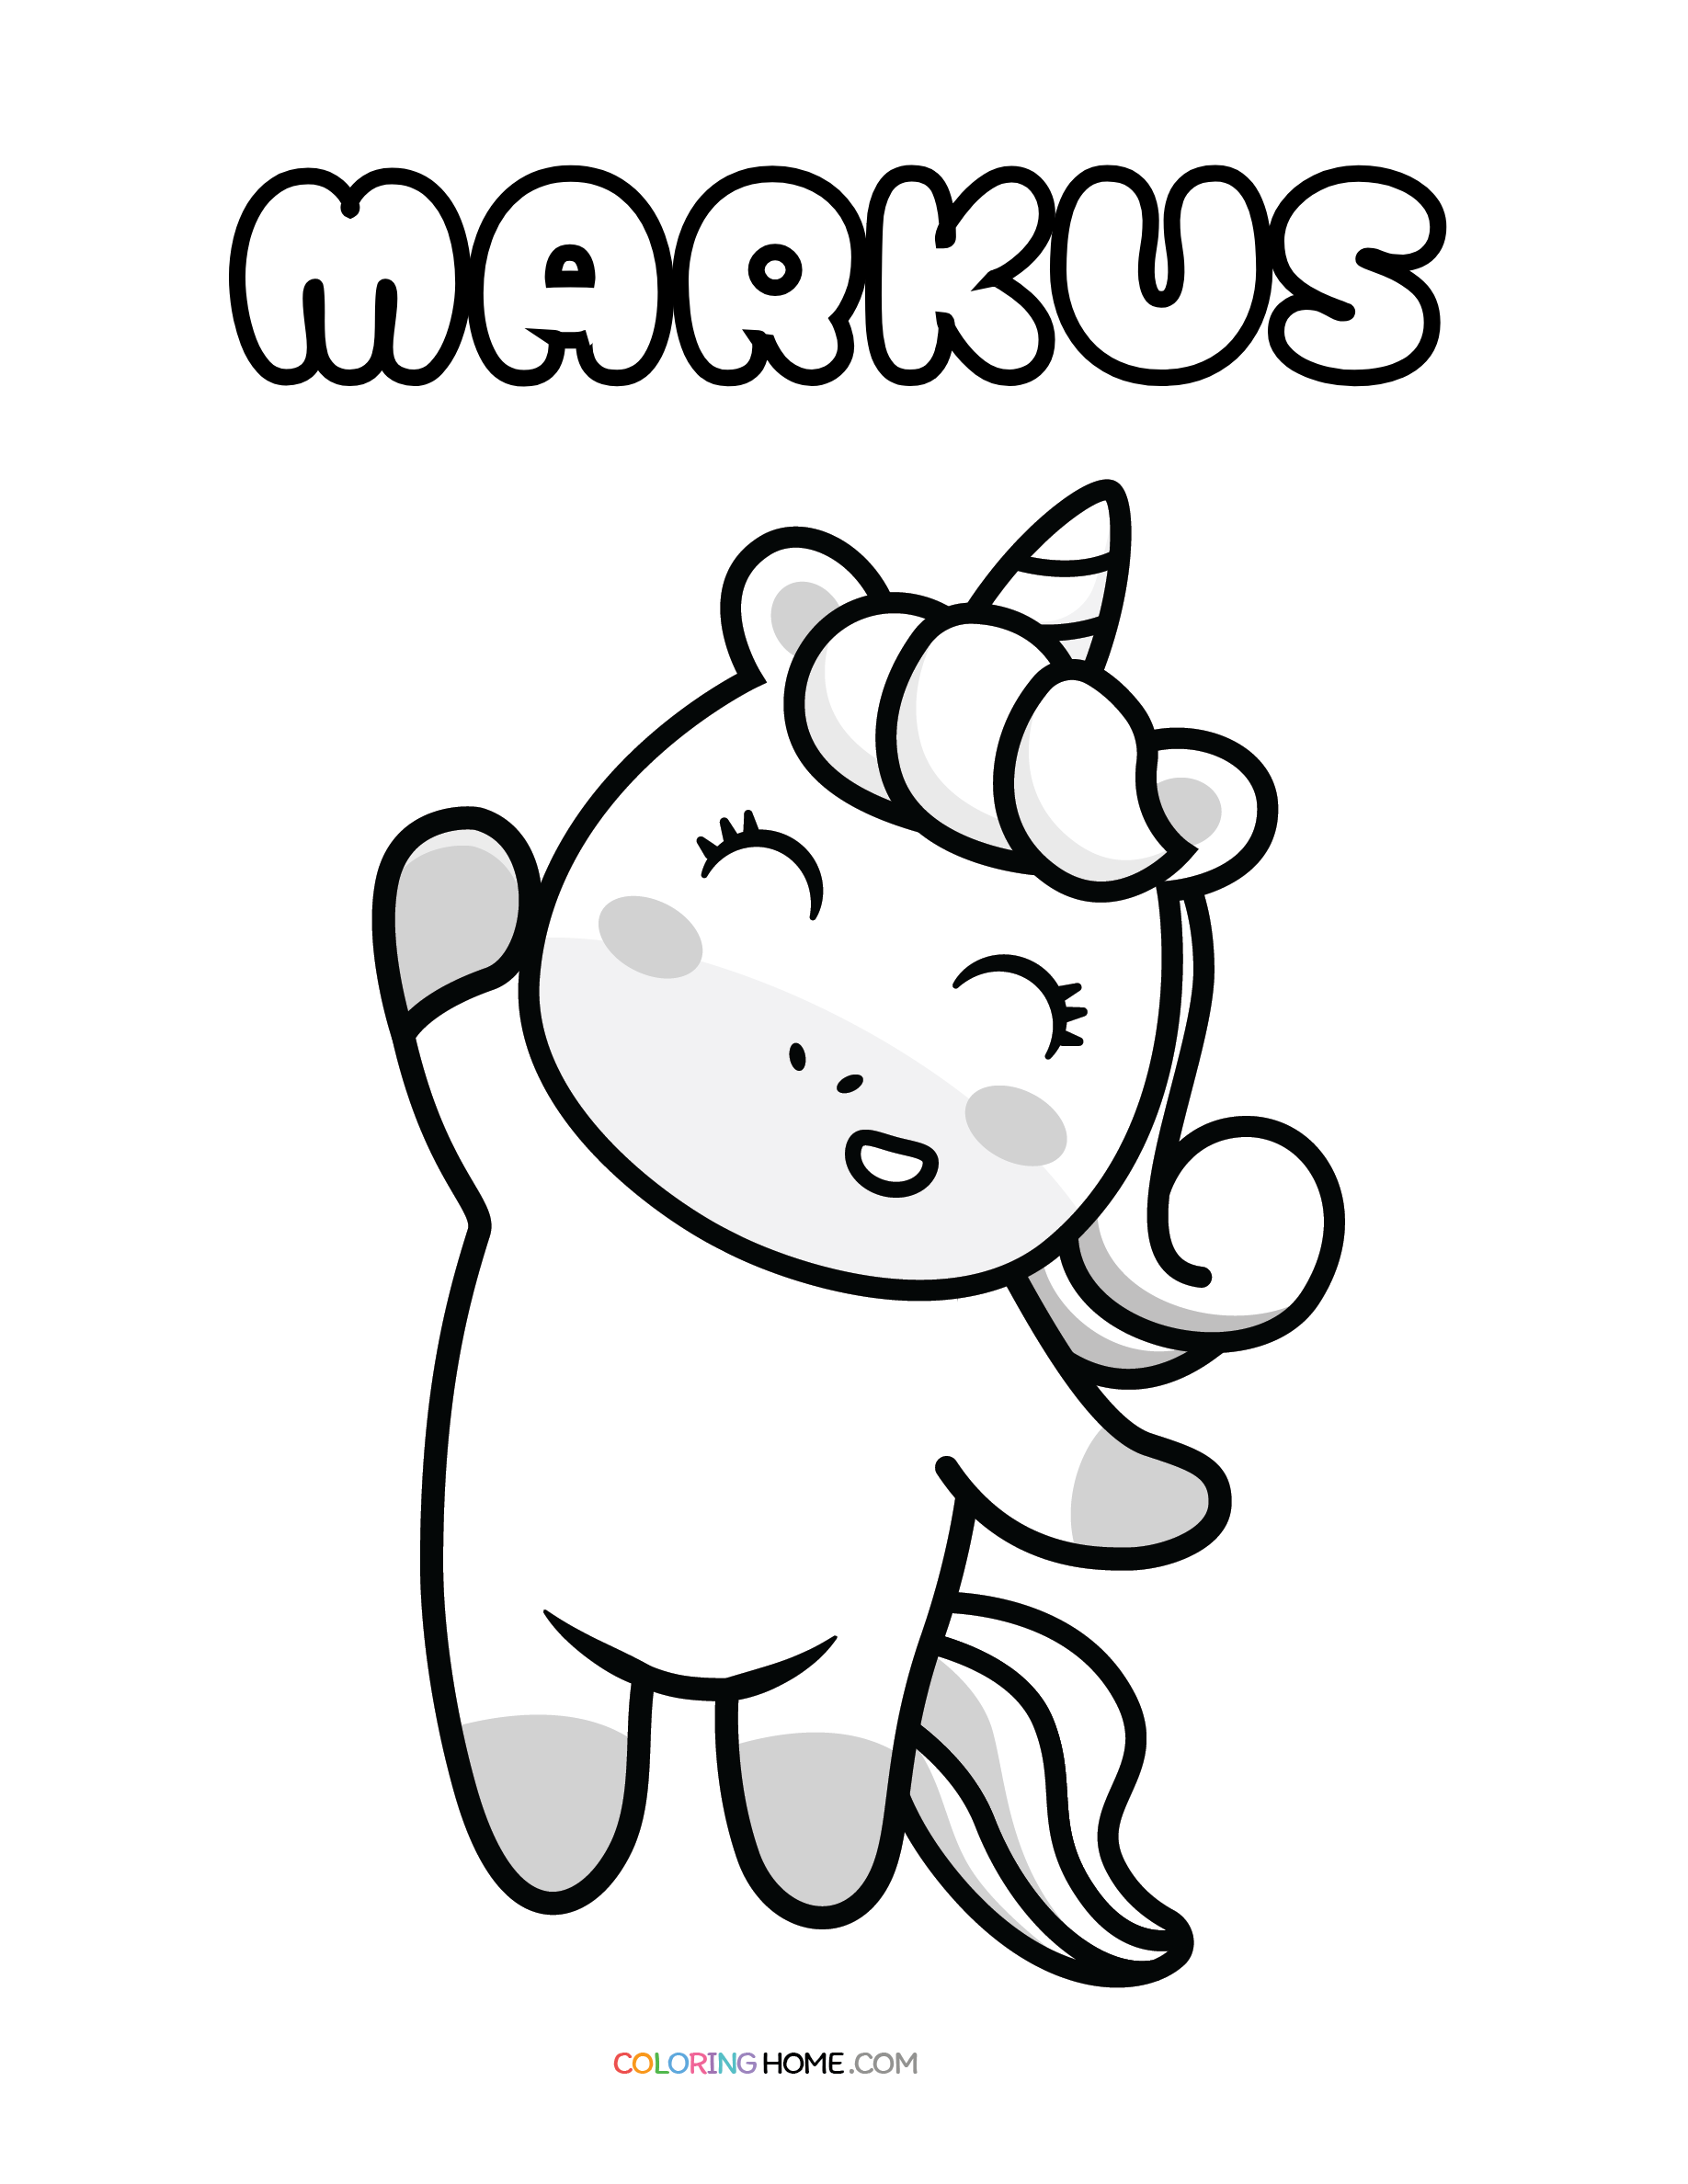 Markus unicorn coloring page